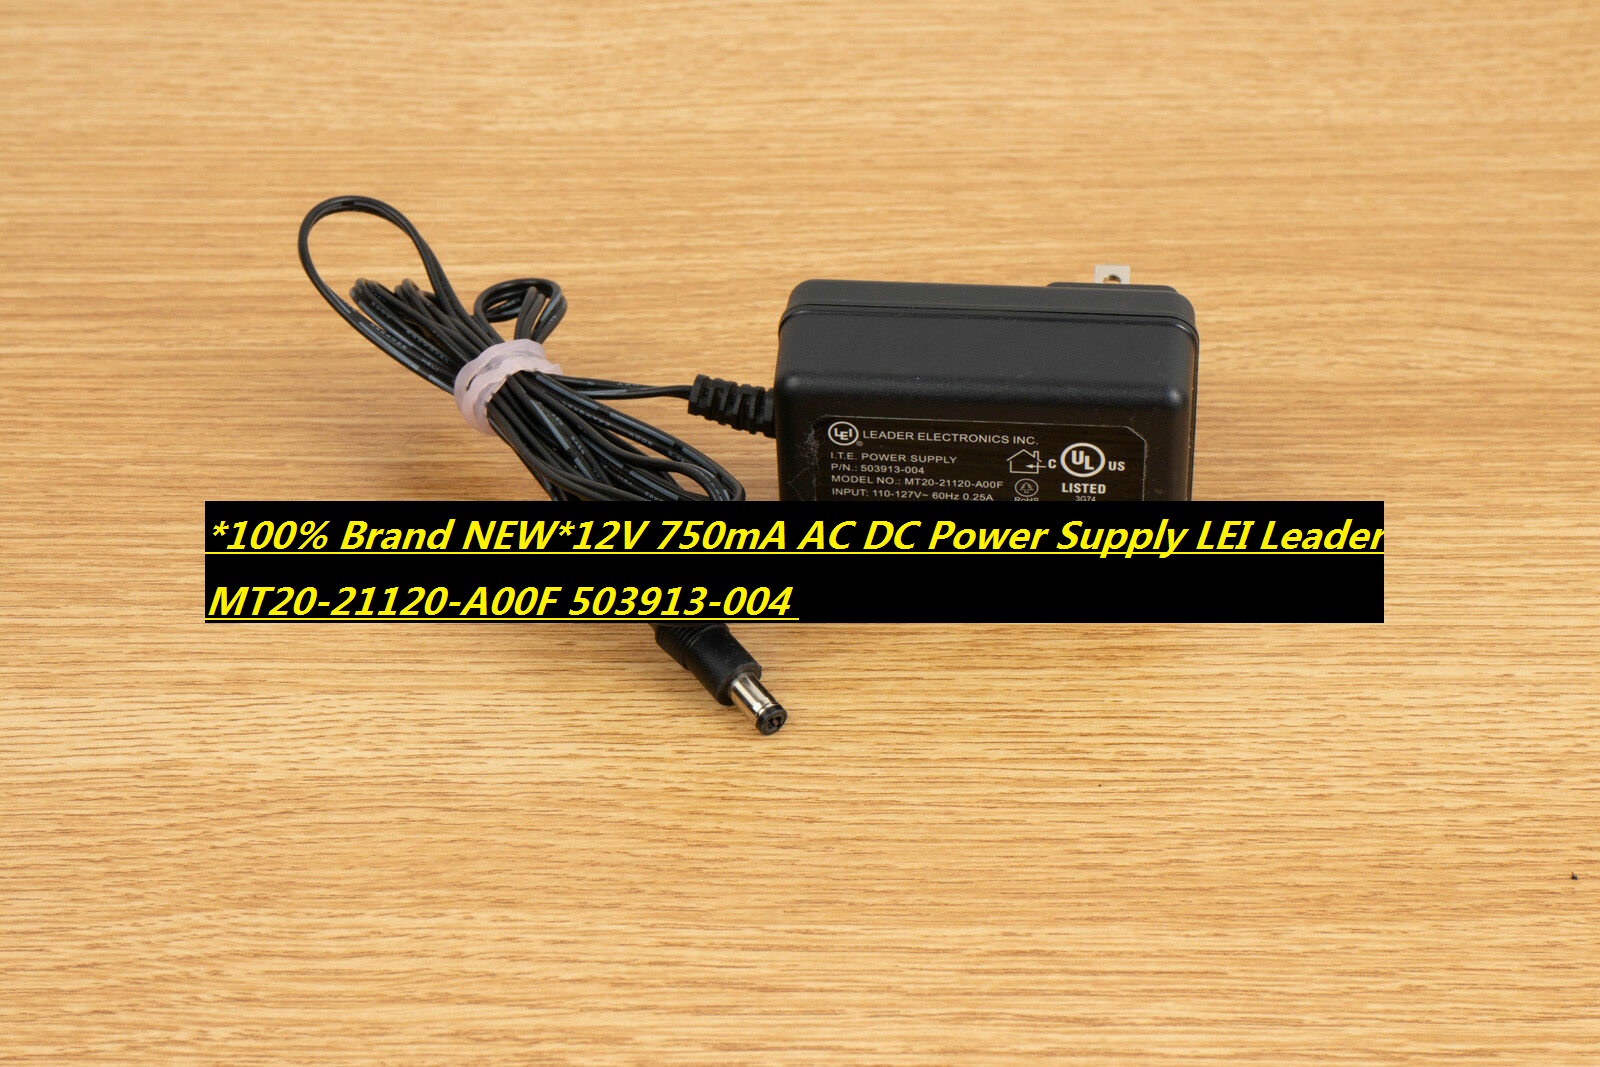 *100% Brand NEW*12V 750mA AC DC Power Supply LEI Leader MT20-21120-A00F 503913-004